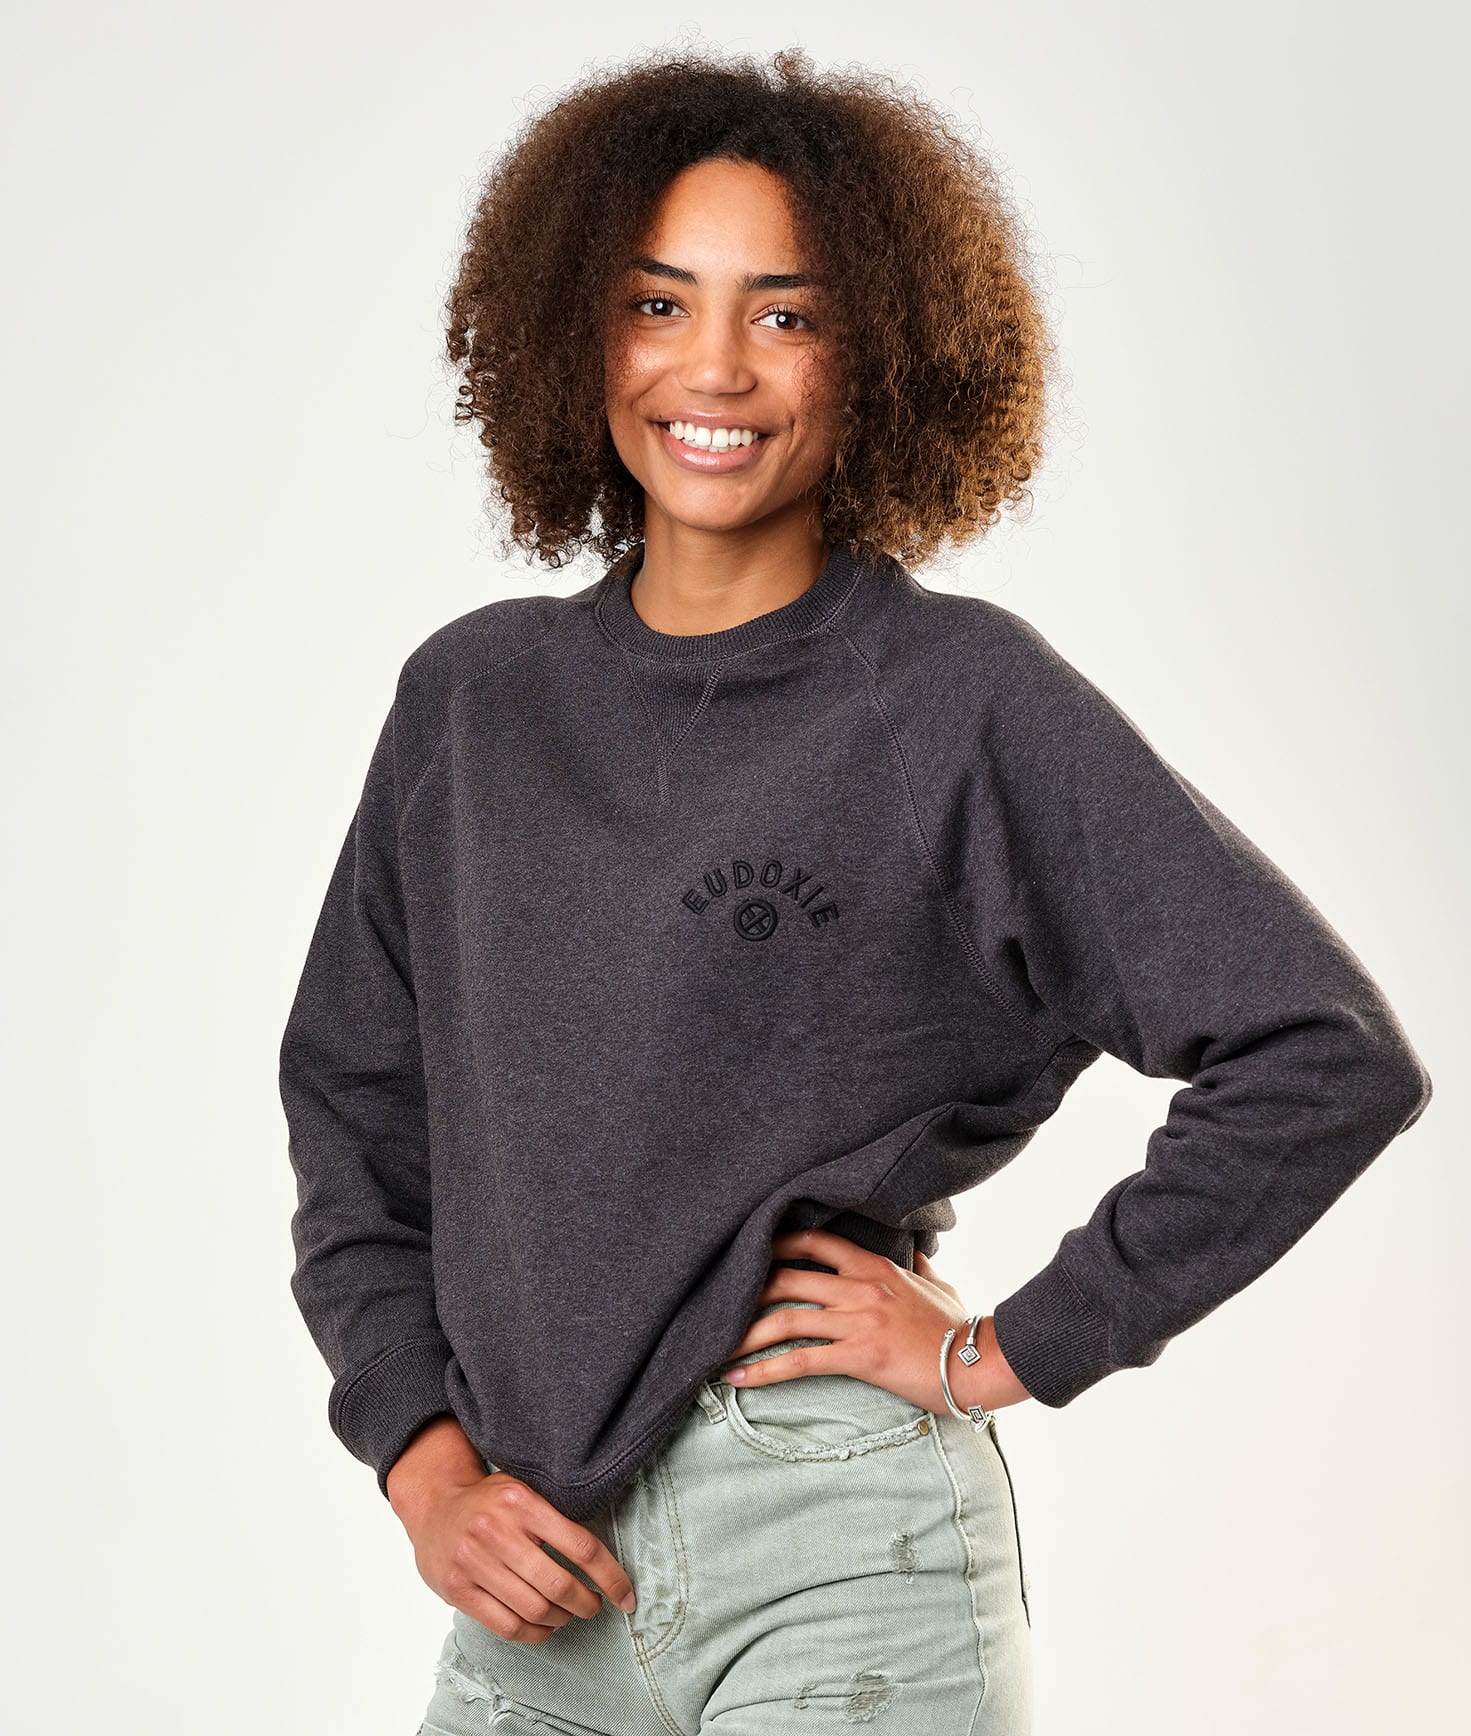 Eudoxie "Bonnie" Embroidered Sweatshirt - Large - Bild 1